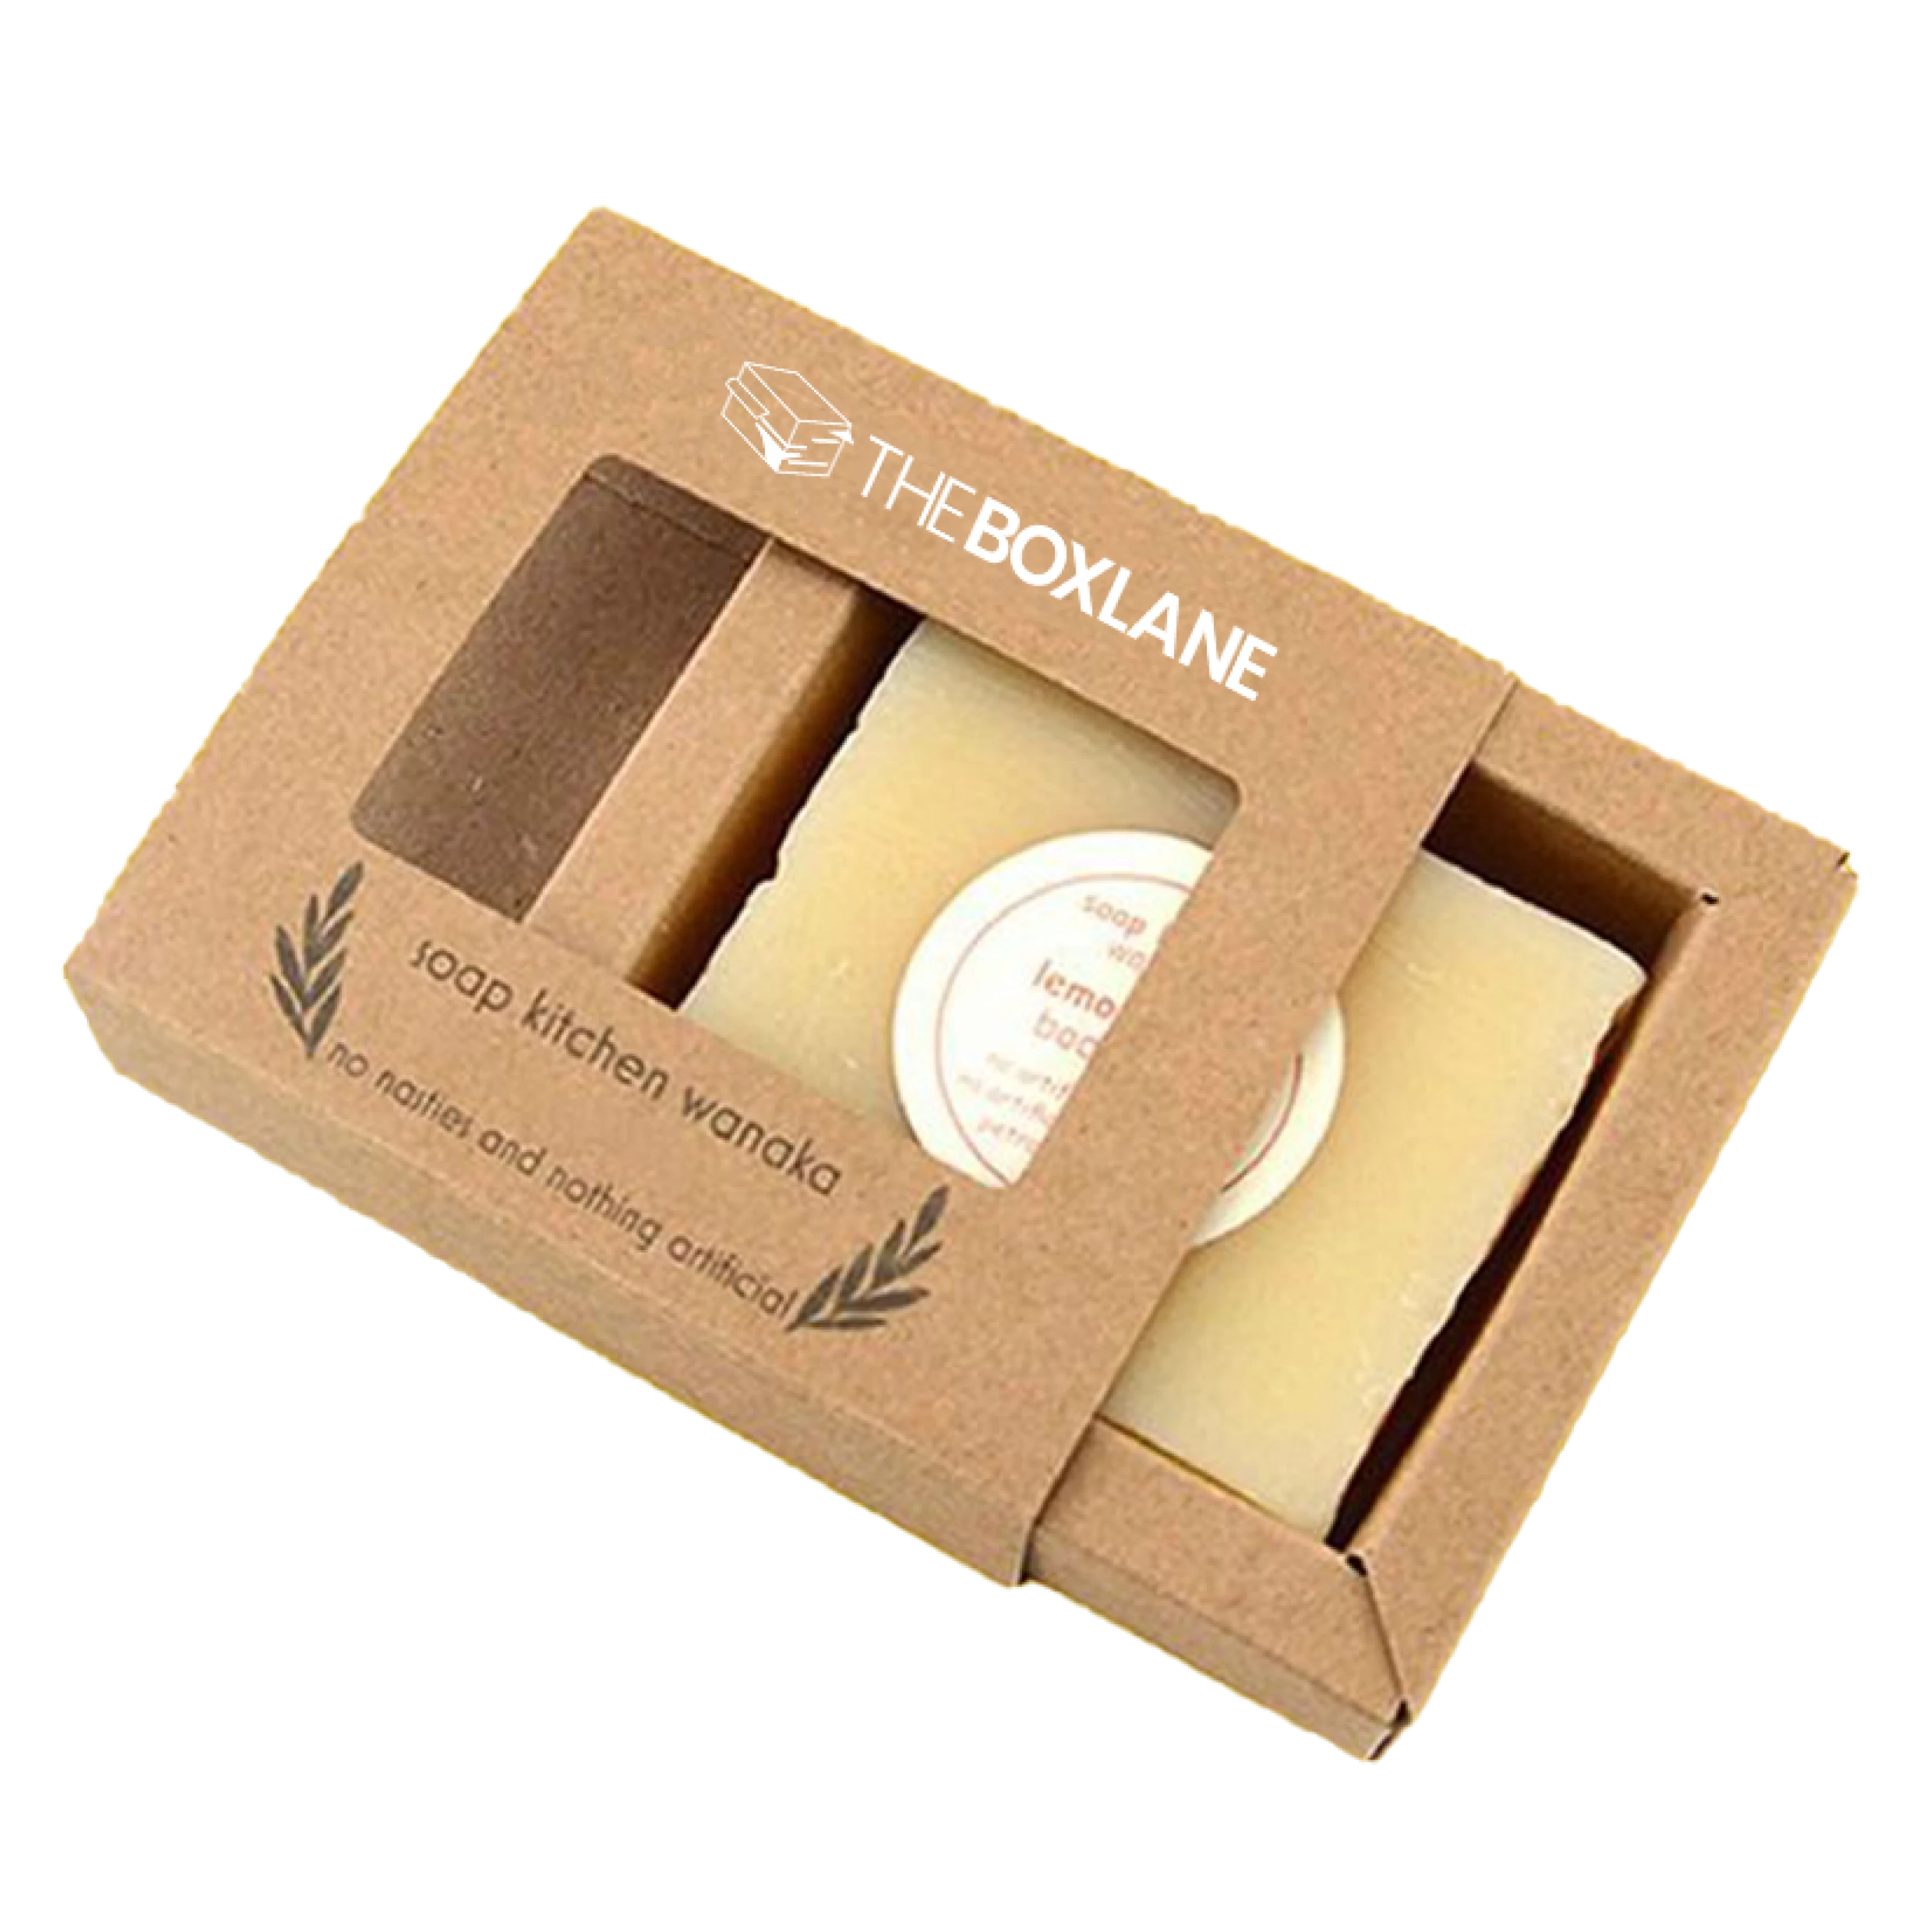 Carousel Kraft Soap Boxes packaging image 3 | The Box Lane